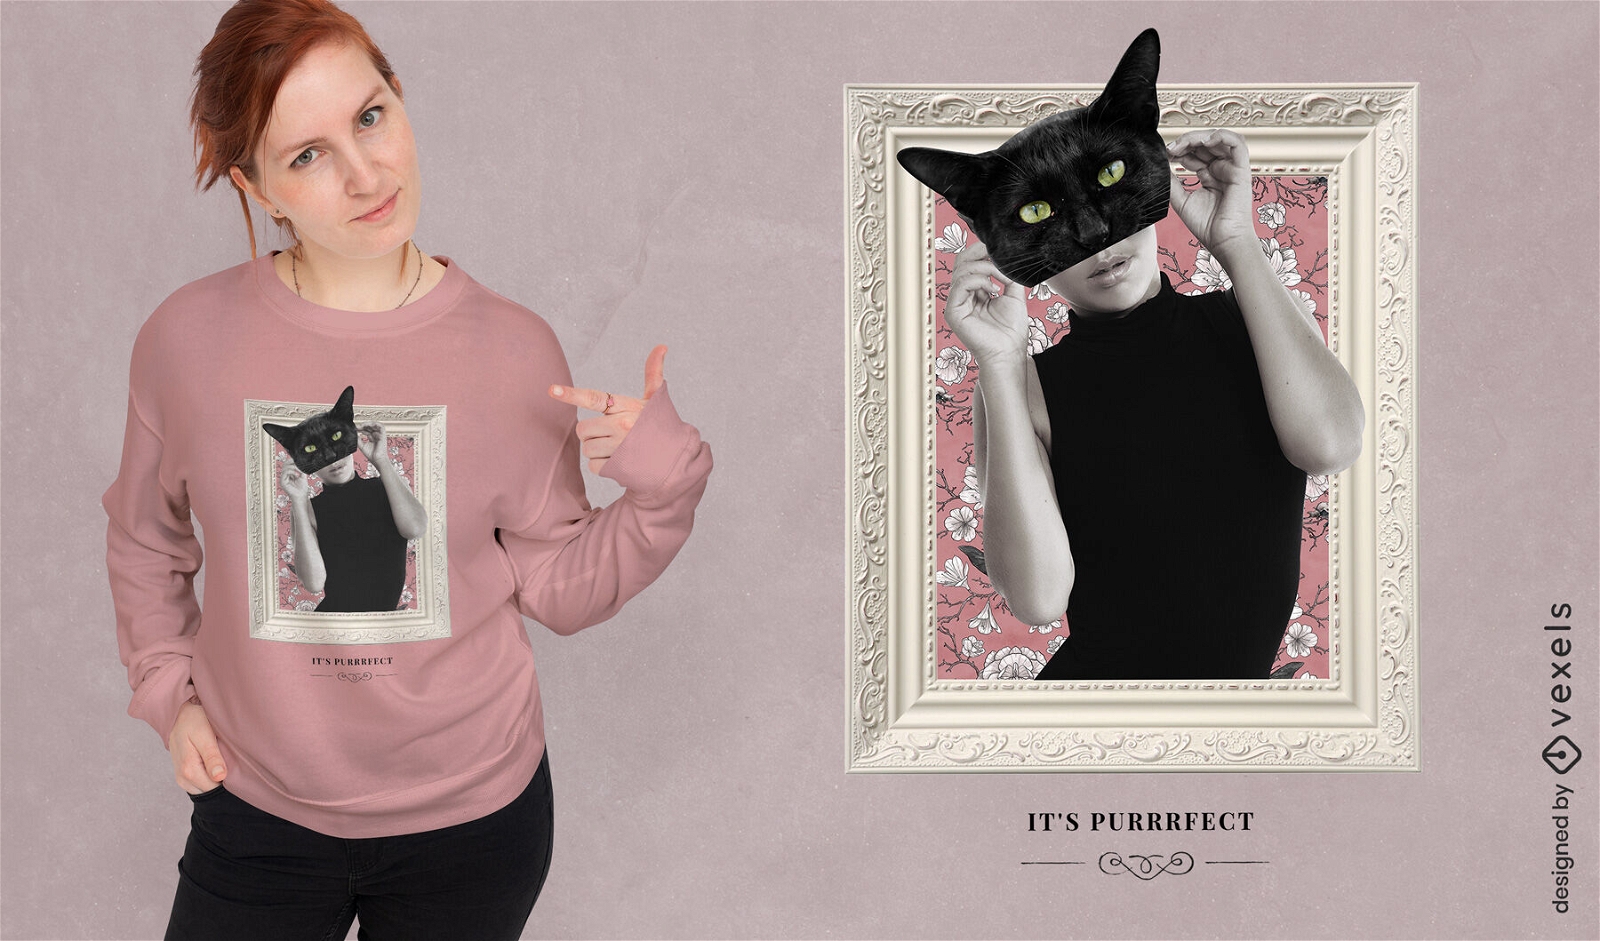 Black cat woman t-shirt design